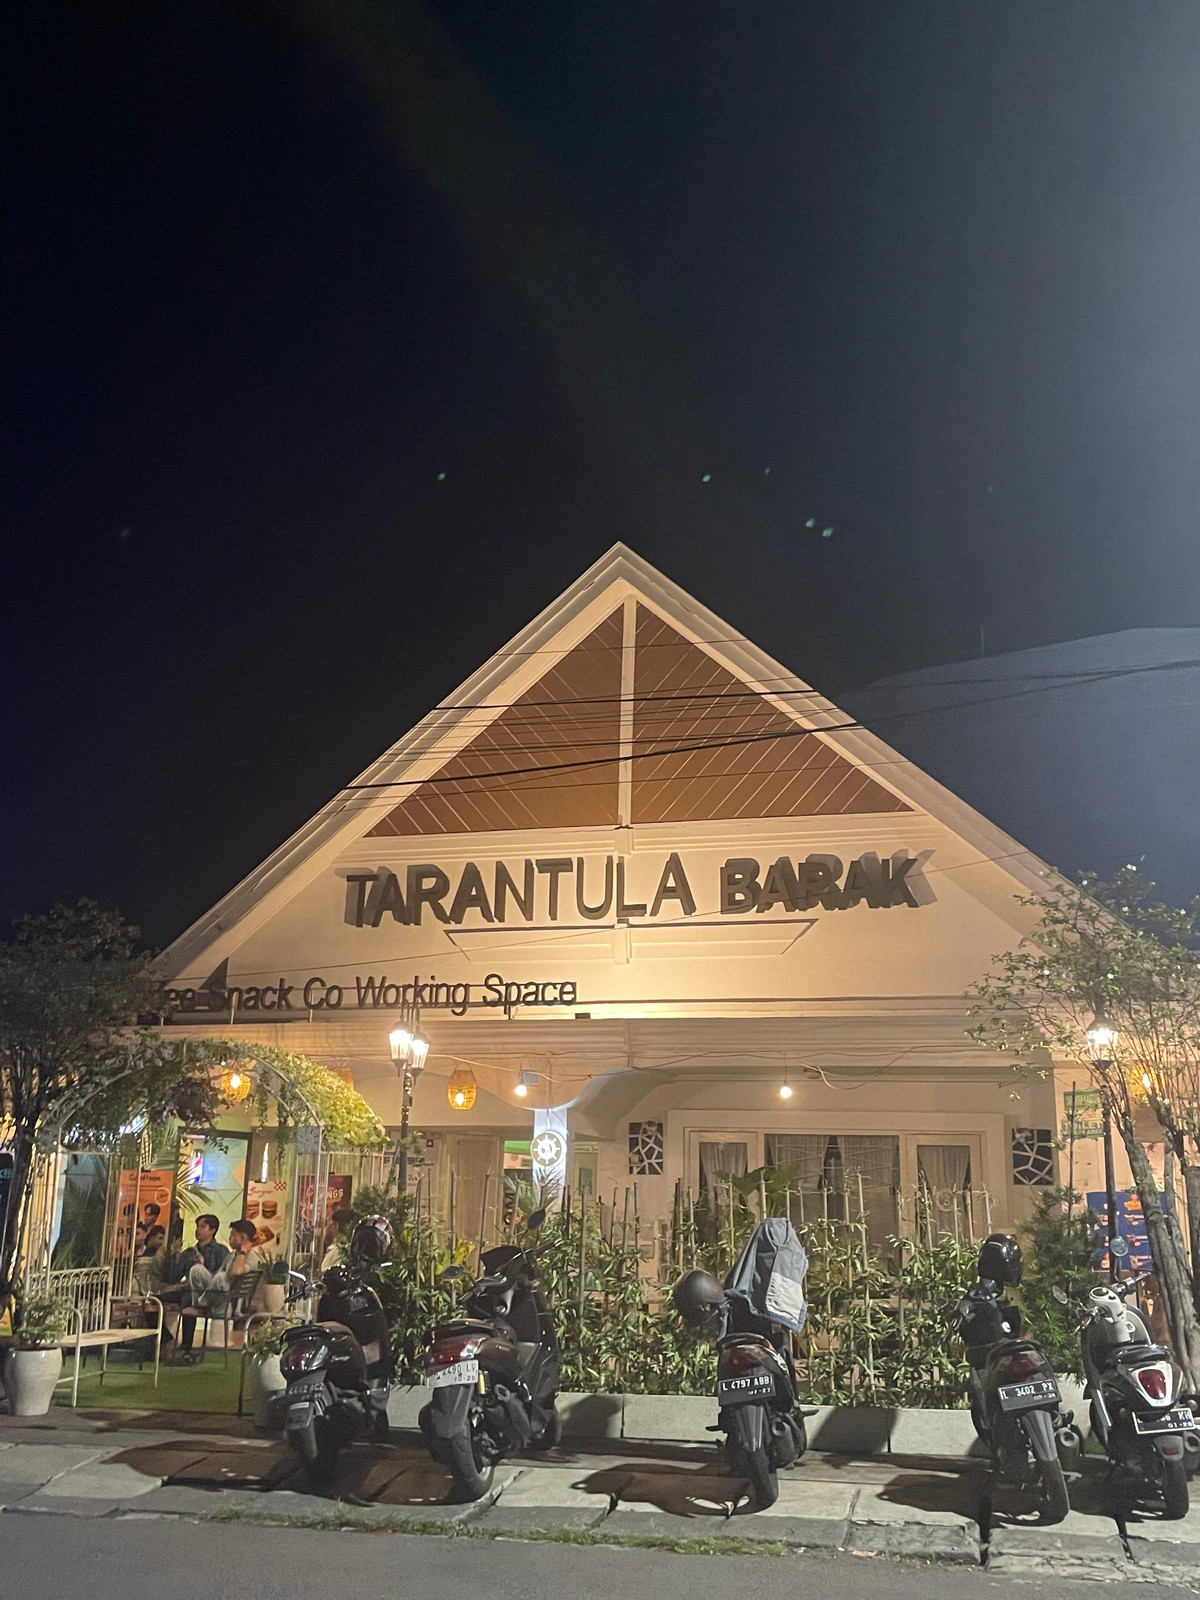 Temukan Kopi Spesial dan Suasana Nyaman di Tarantula Barak Coffee & Space Surabaya